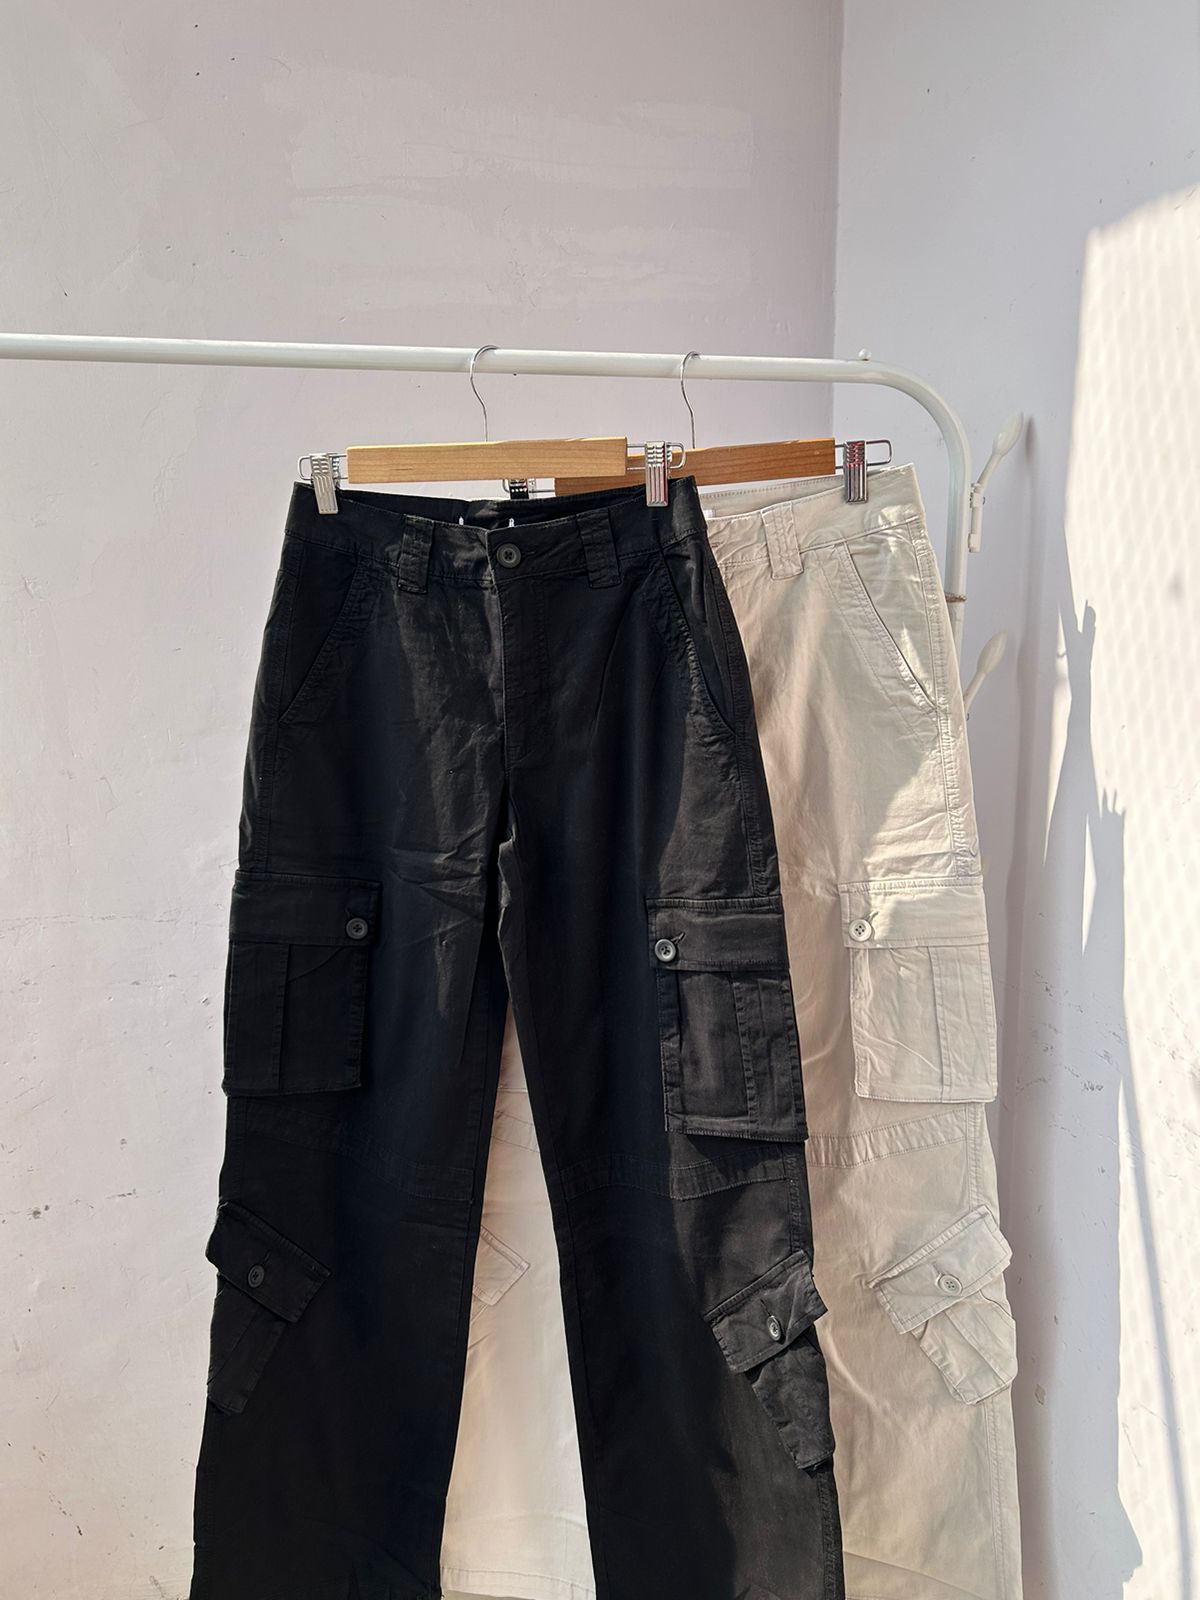 TRGPSG Men's Cargo Pants with 8 Pockets Cotton Cargo Work Pants(No  Belt),Gray 42x33 - Walmart.com